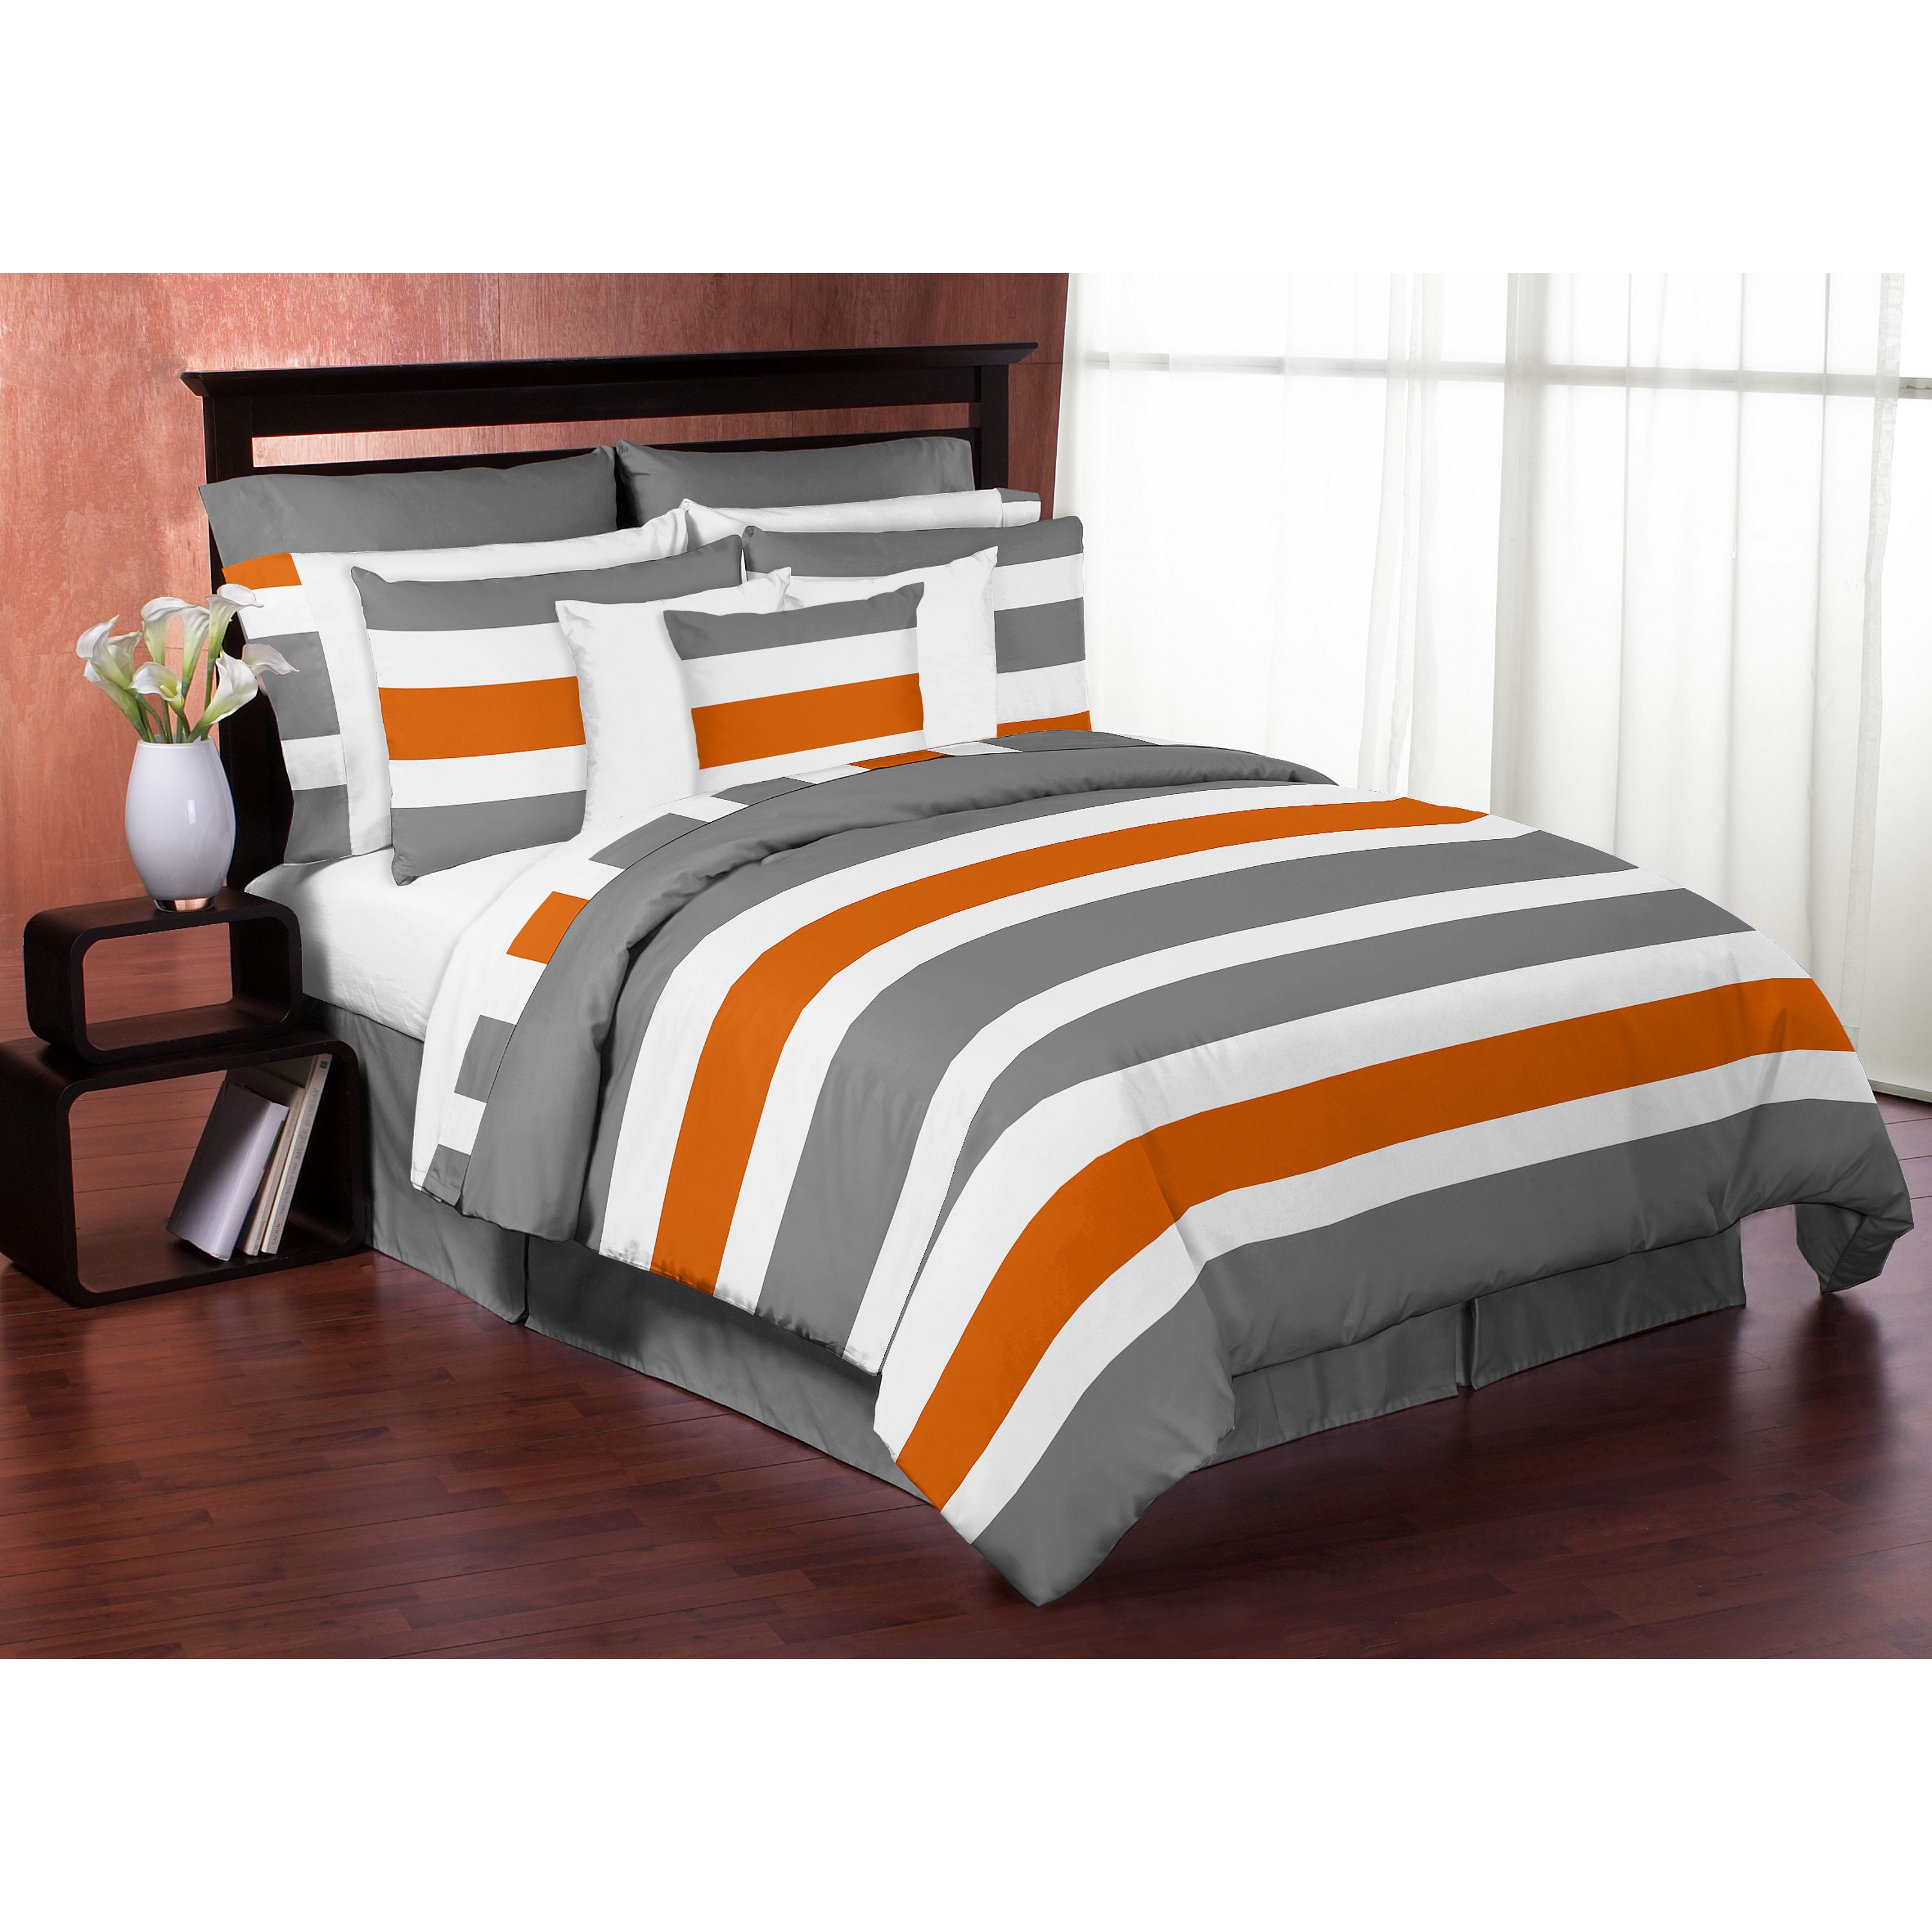 https://ak1.ostkcdn.com/images/products/12990833/Sweet-Jojo-Designs-Gray-and-Orange-Stripe-4-piece-Twin-Comforter-Set-bfb1bab6-bd1e-4207-b307-b5902cbdae93.jpg